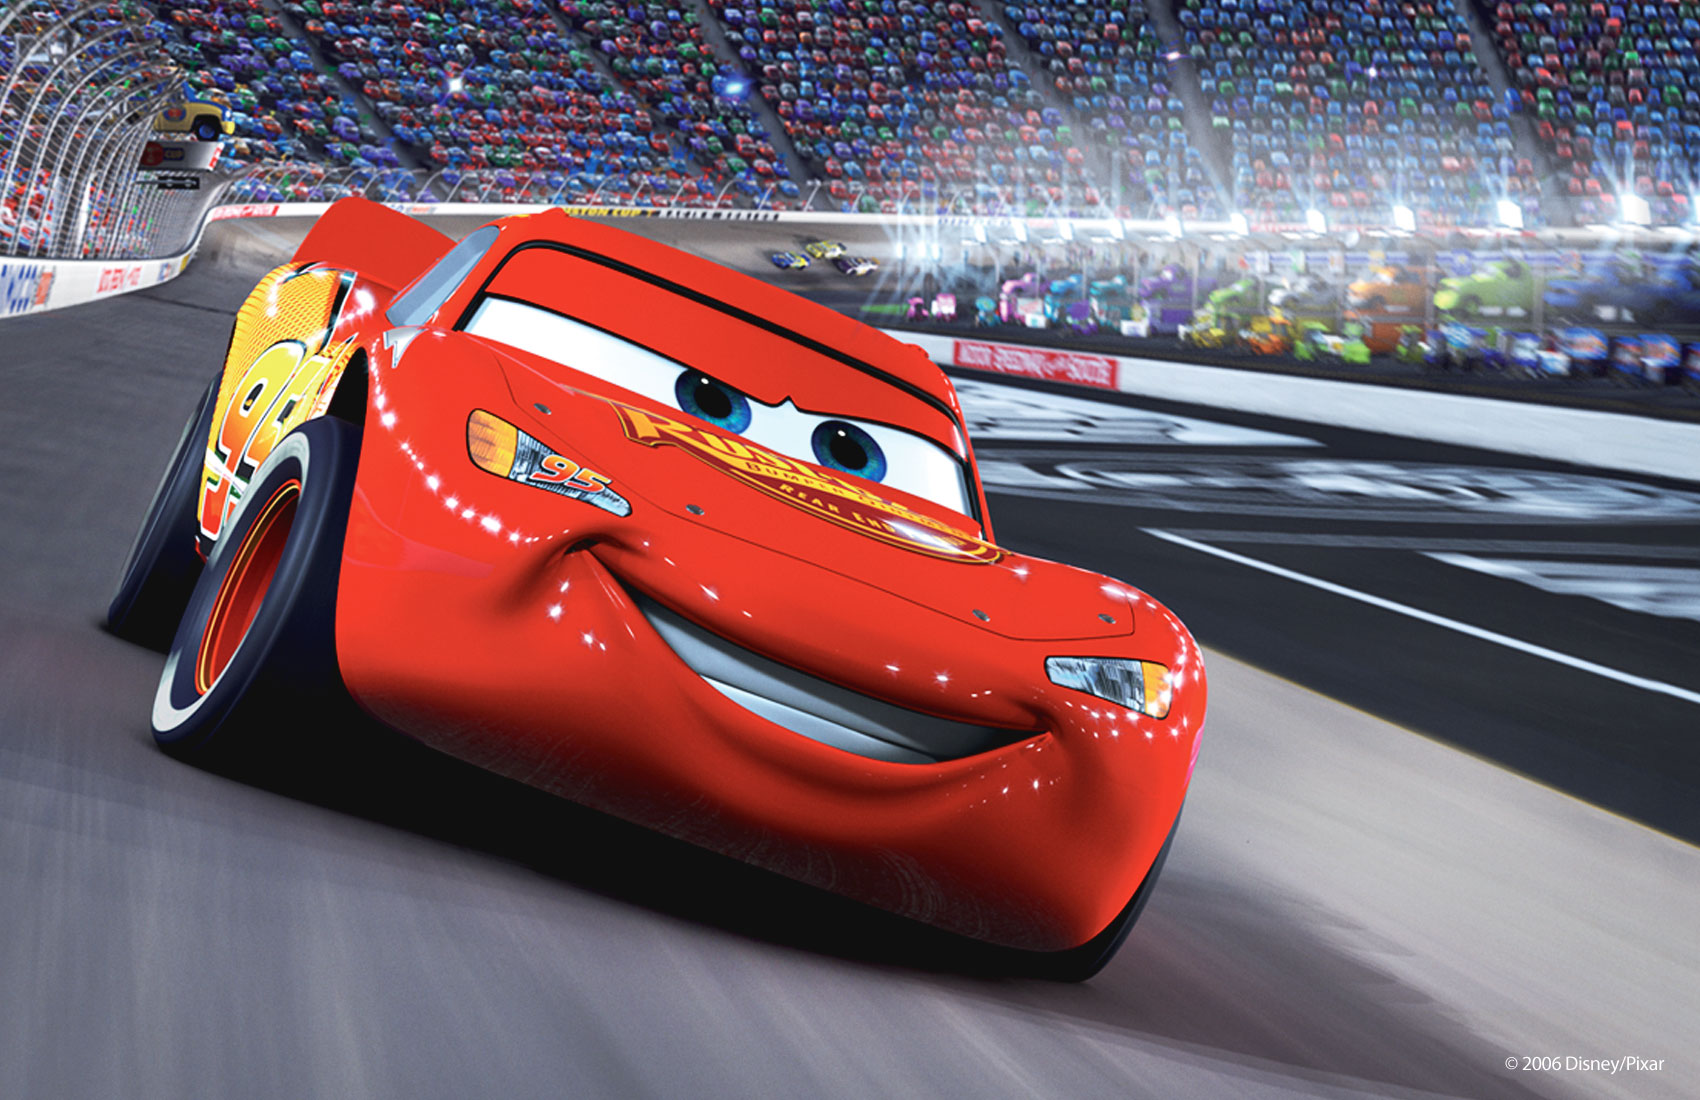 Disney Pixar Cars Lightning McQueen